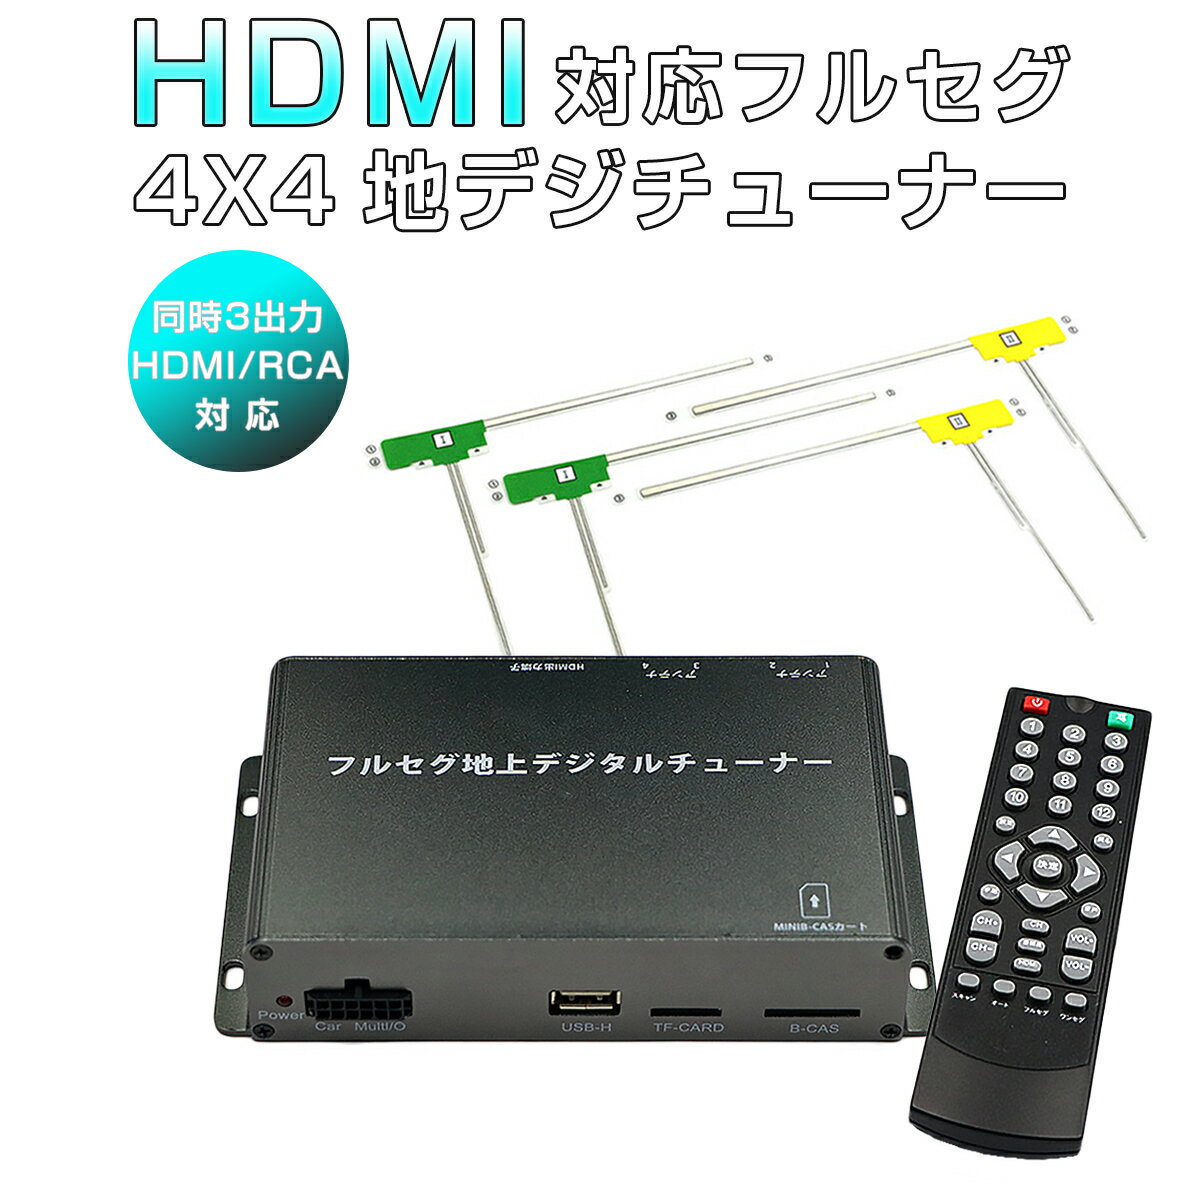 NISSAN用の非純正品 サファリ 地デジチューナー カーナビ ワンセグ フルセグ HDMI 4x4 高性能 4チューナー 4アンテナ 自動切換 150km/hまで受信 高画質 古い車載TVやカーナビにも使える 12V/24V フィルムアンテナ miniB-CASカード付き 6ヶ月保証